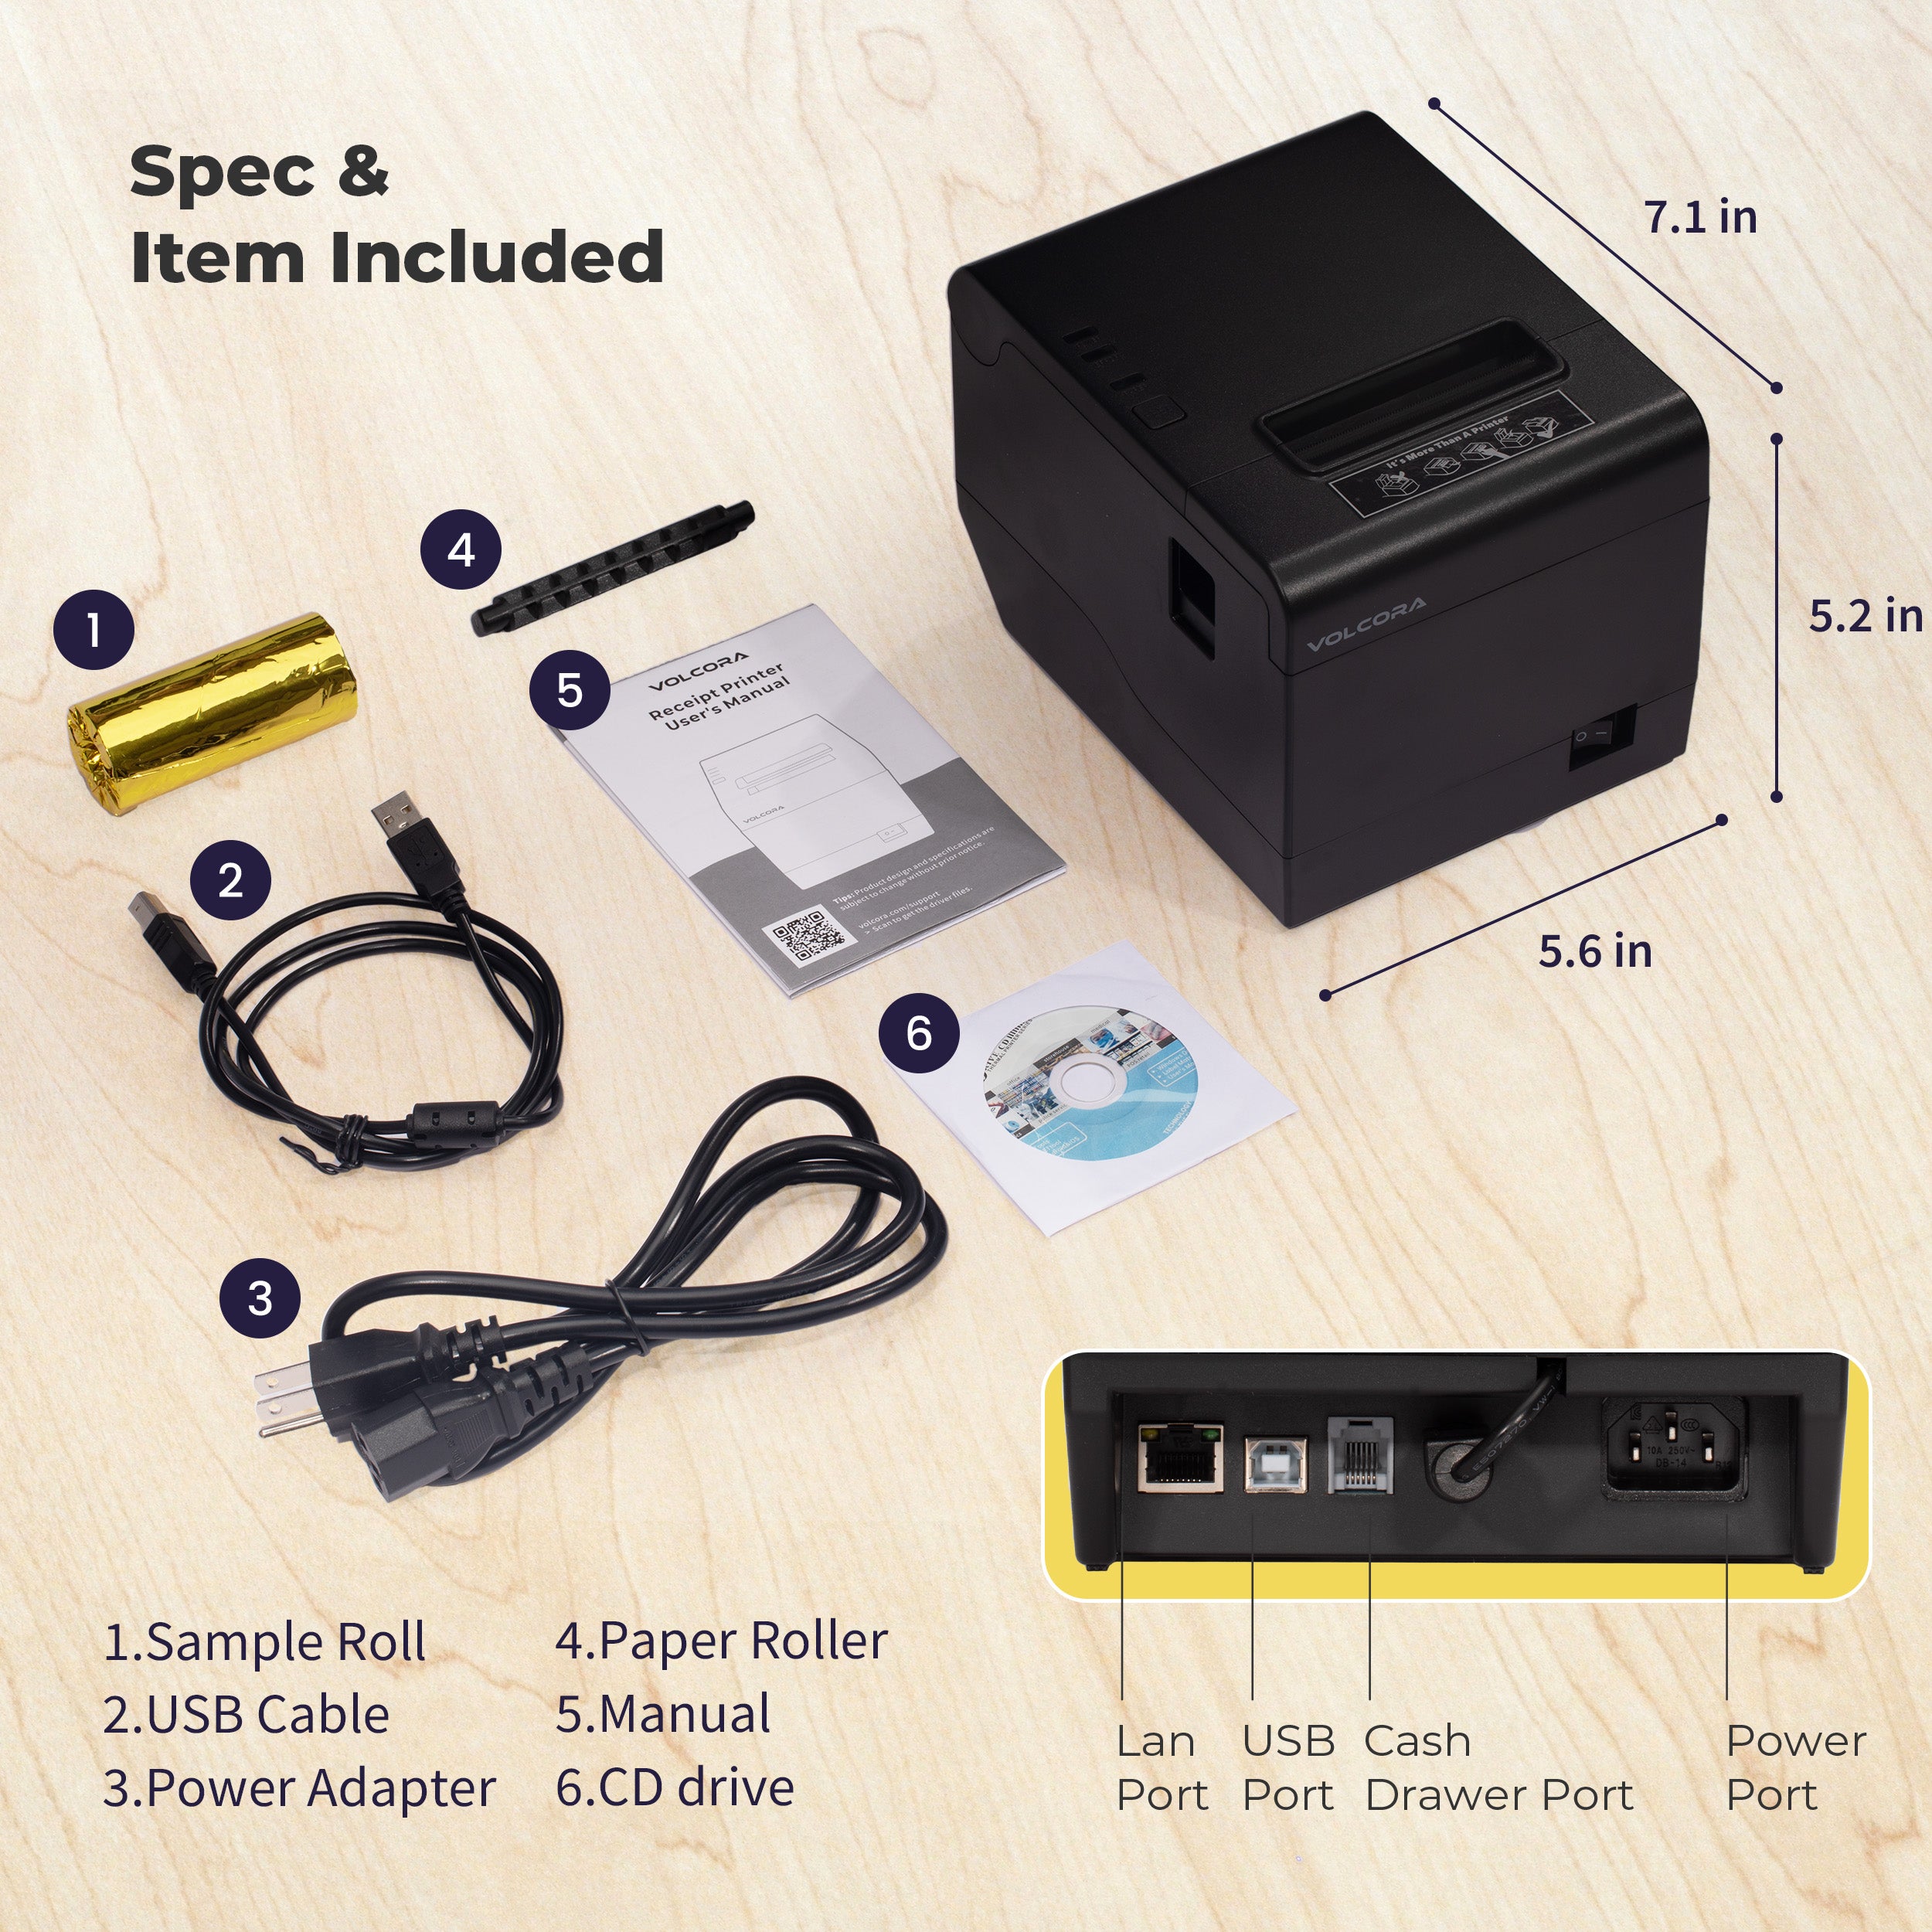 Impresora térmica de recibos Volcora Performance de 80 mm USB/WiFi - Serie V-WLRP5 - No compatible con Square